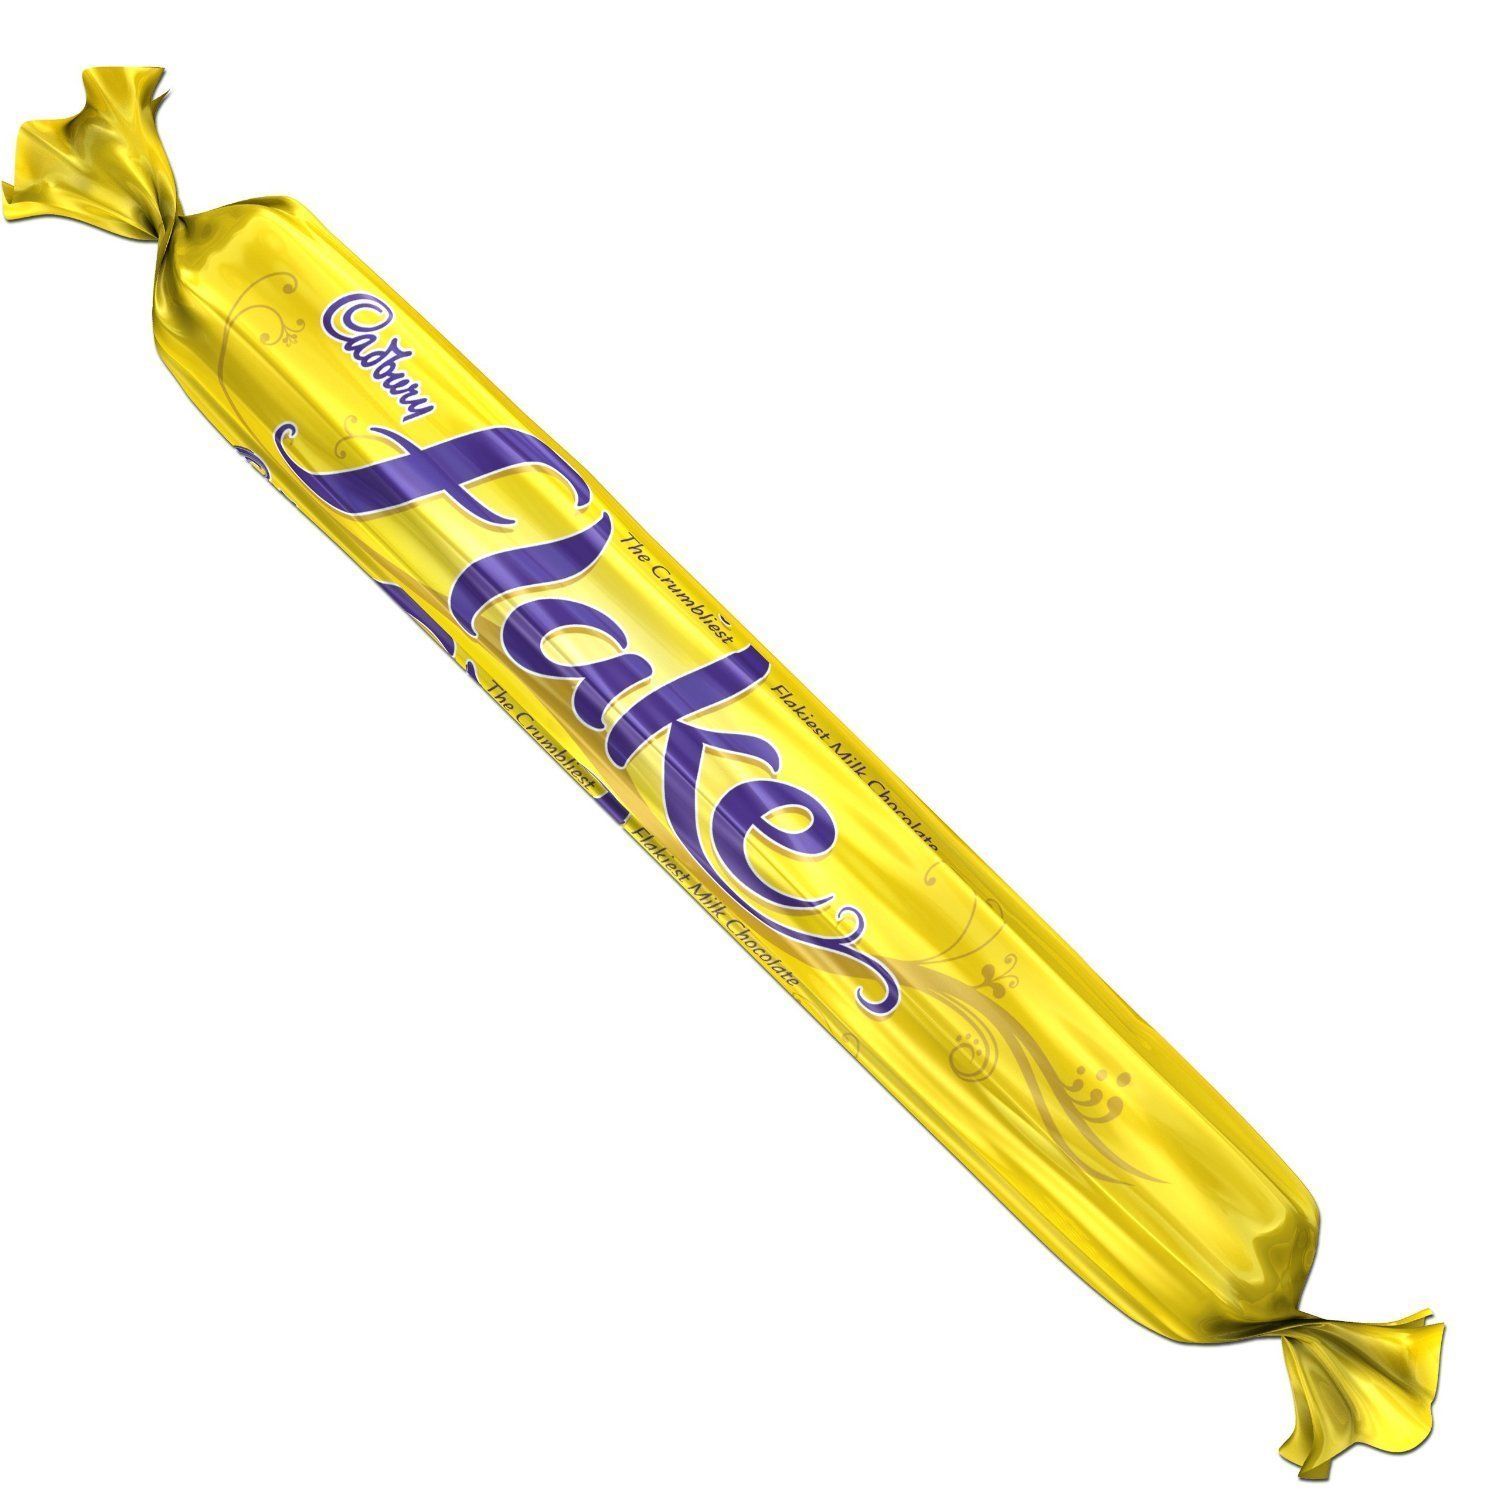 Can you melt a Cadbury's Flake?